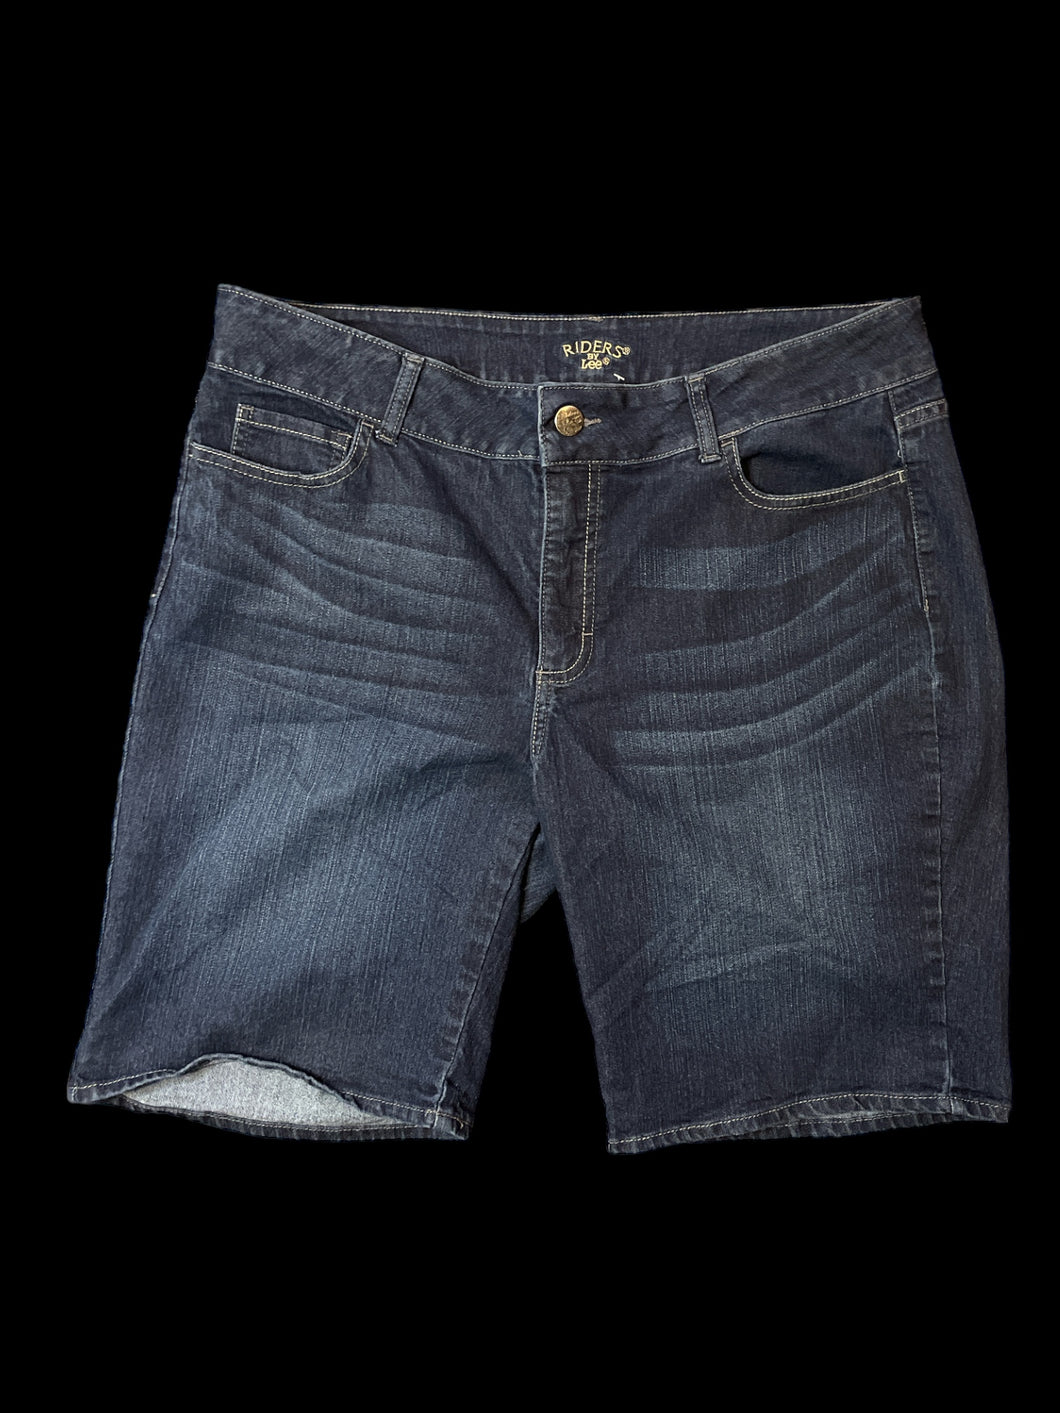 XL Dark blue denim jean shorts w/ belt loops, pockets, gem stone accents on back pockets, & button/zipper closure